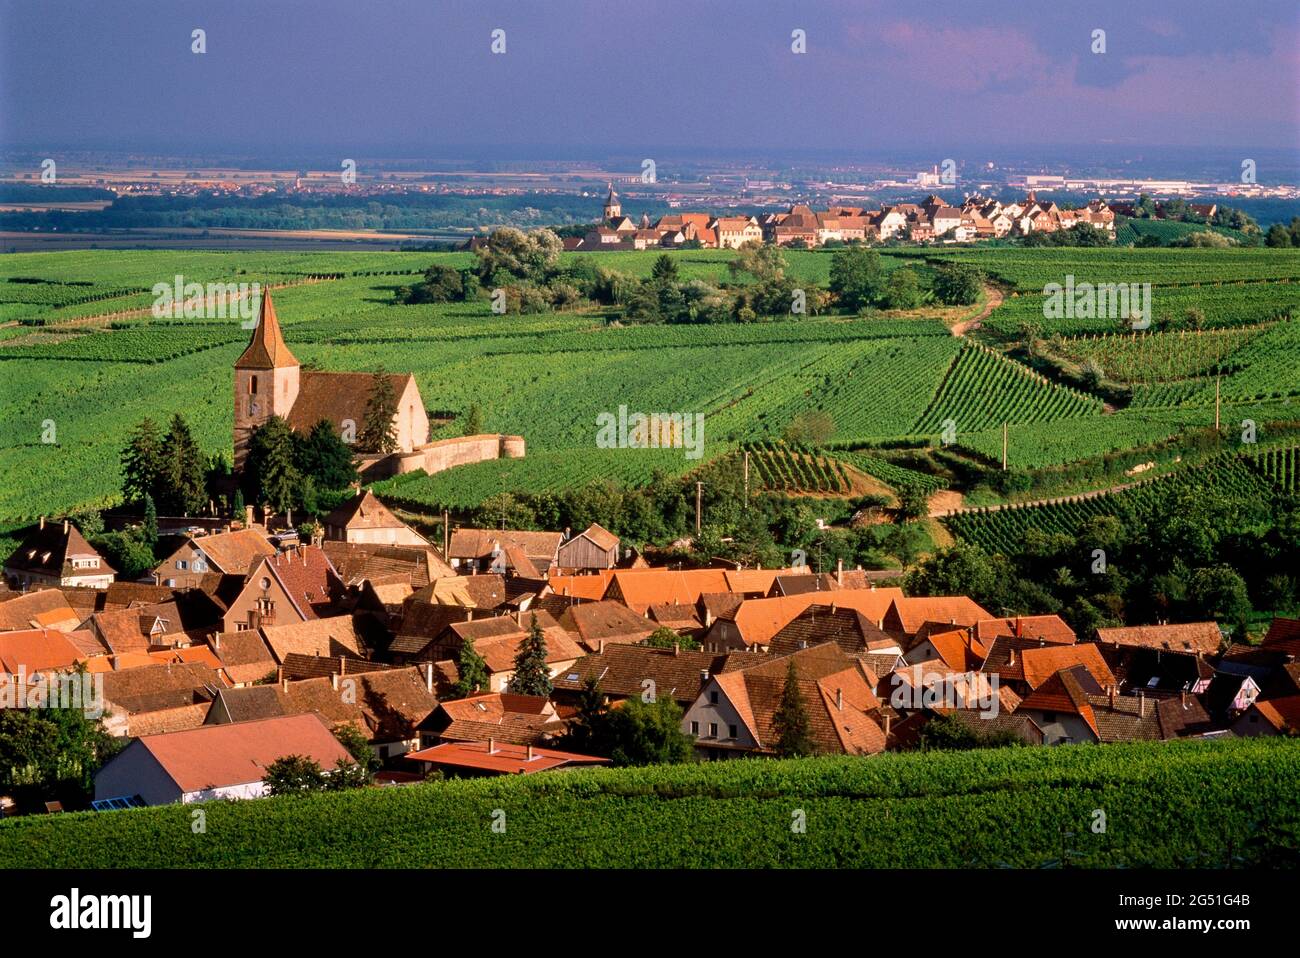 Village de vignes, Hunawihr, Alsace, France Banque D'Images